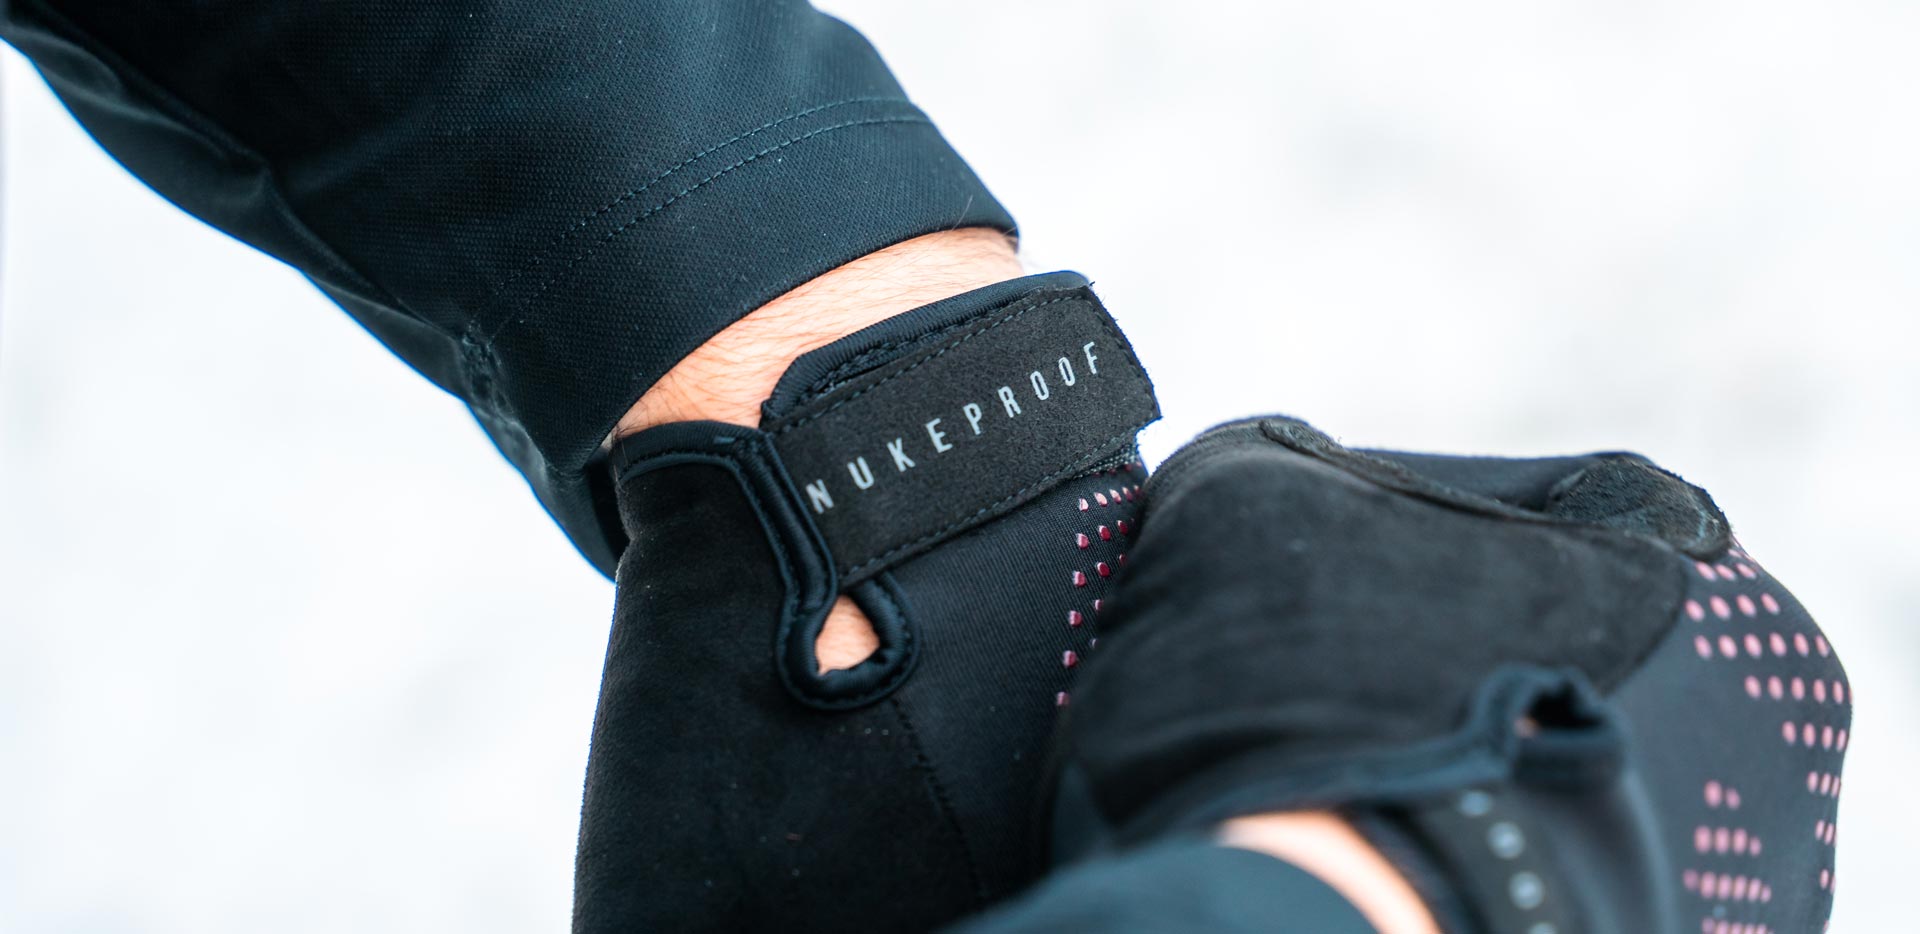 Nukeproof Blackline Winter Ridewear Review